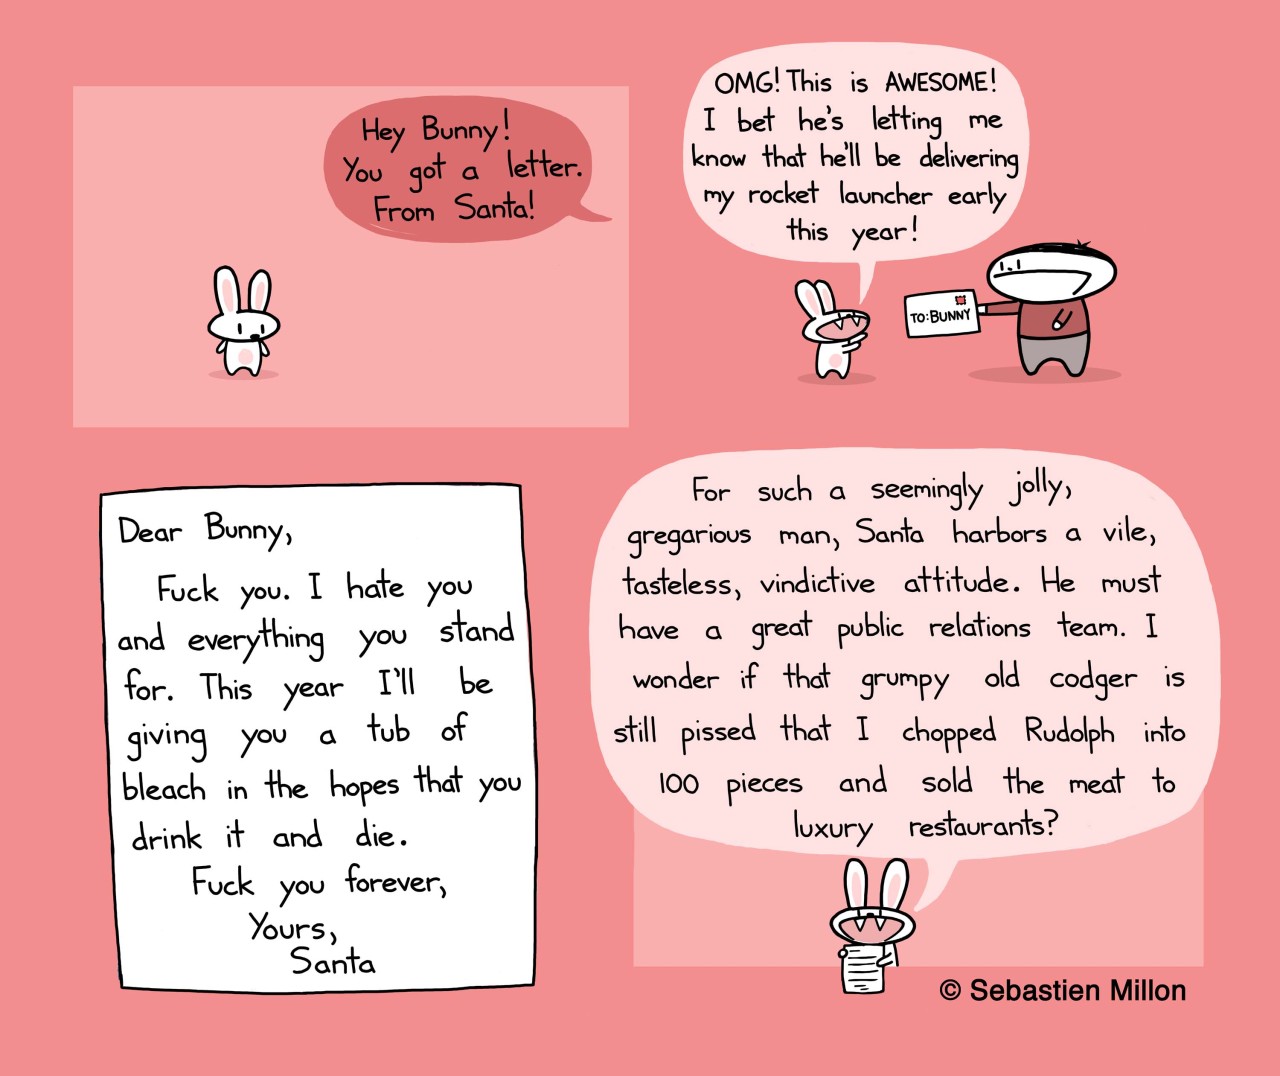 “Santa’s Letter to Bunny”
Illustration by ©sebastien millon